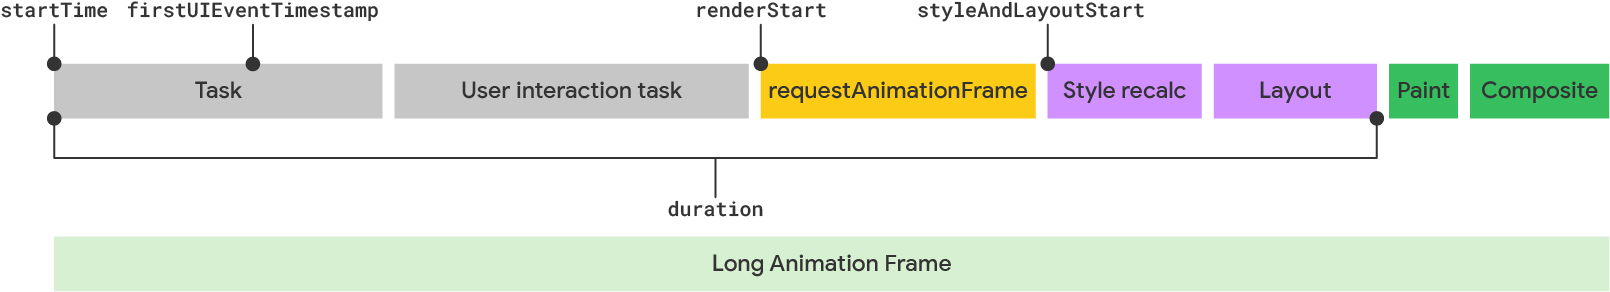 Visualisasi bingkai animasi panjang menurut model LoAF.